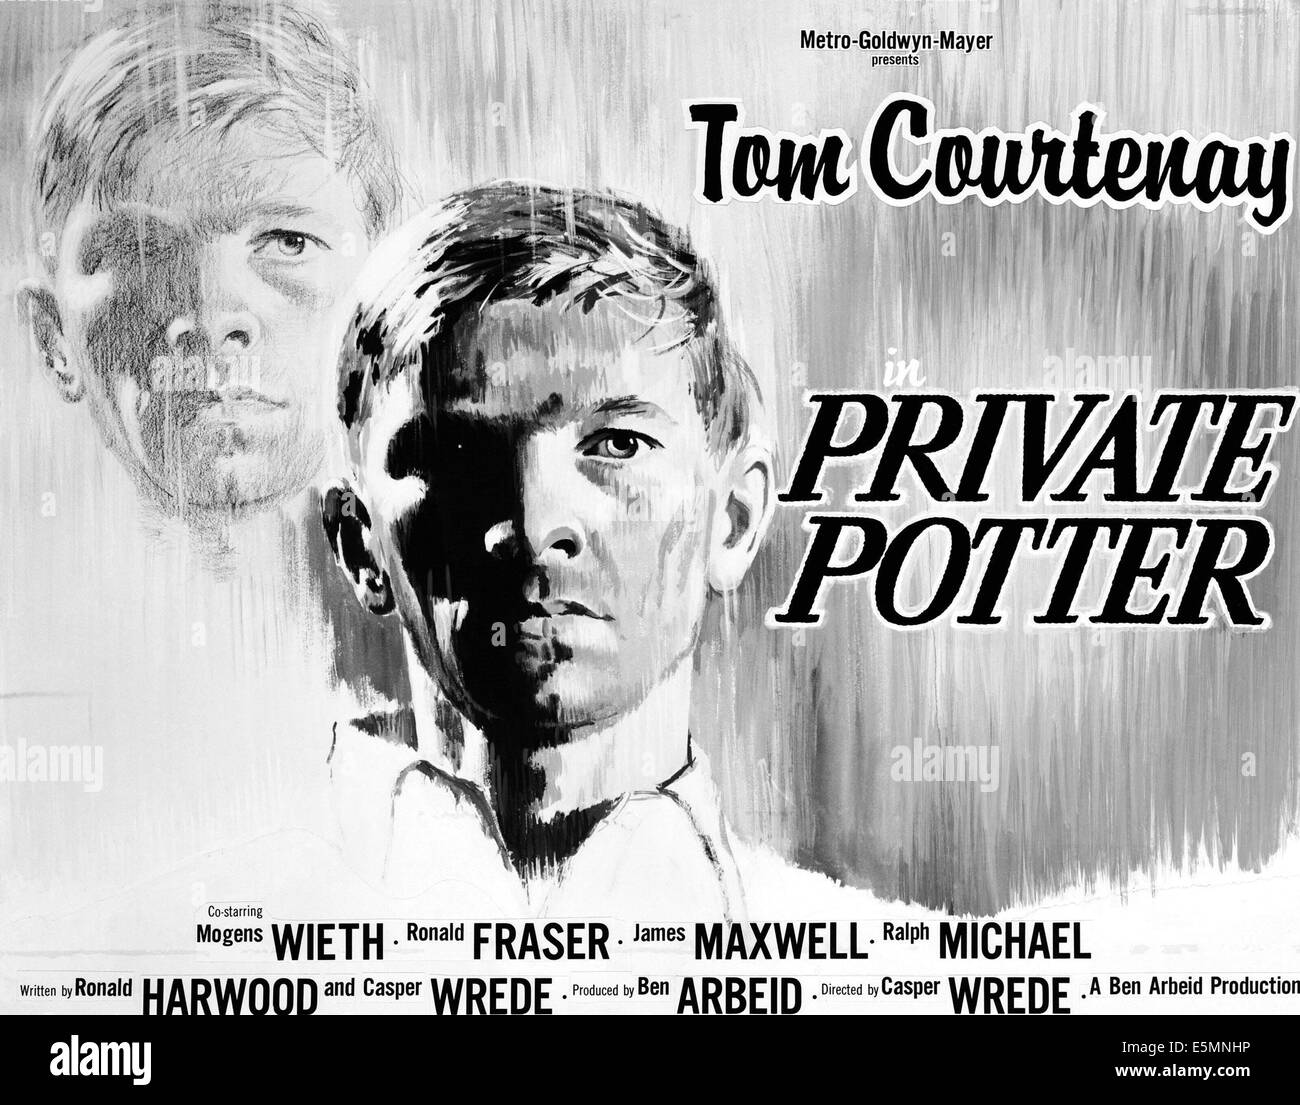 PRIVATE POTTER, Tom Courtenay, 1962 Stock Photo